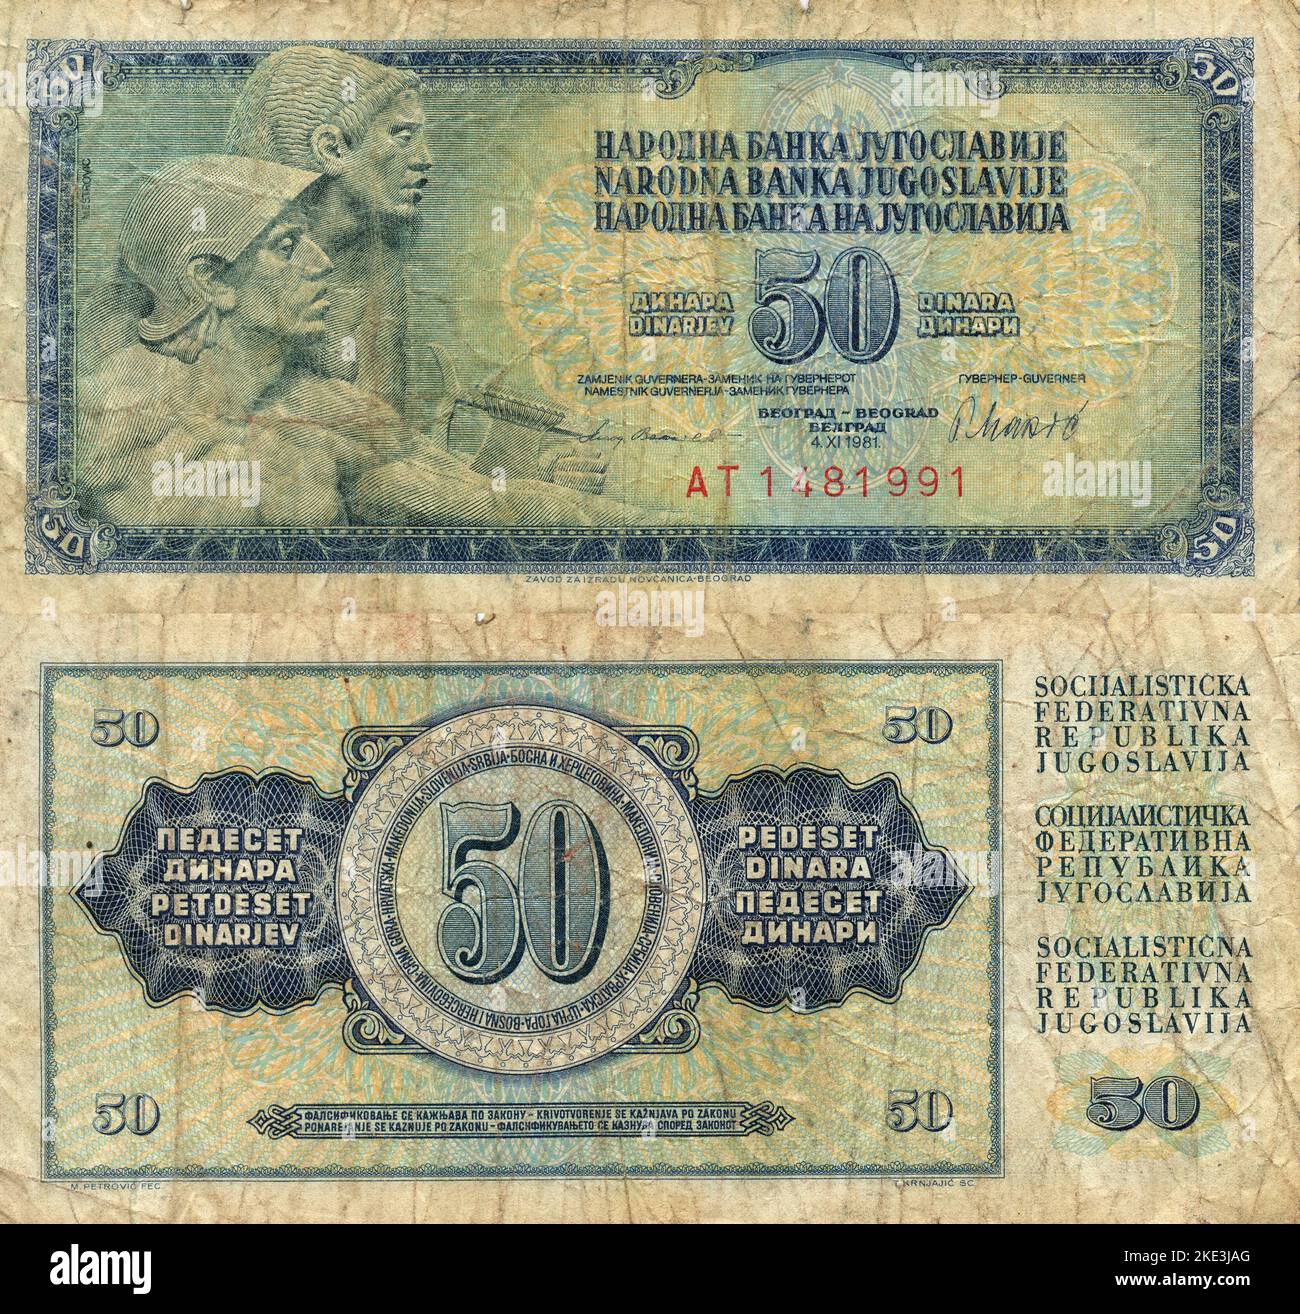 Central Bank of Socialist Federal Republic of Yugoslavia 50 Dinara Banknote, Belgrade 1981 Stock Photo